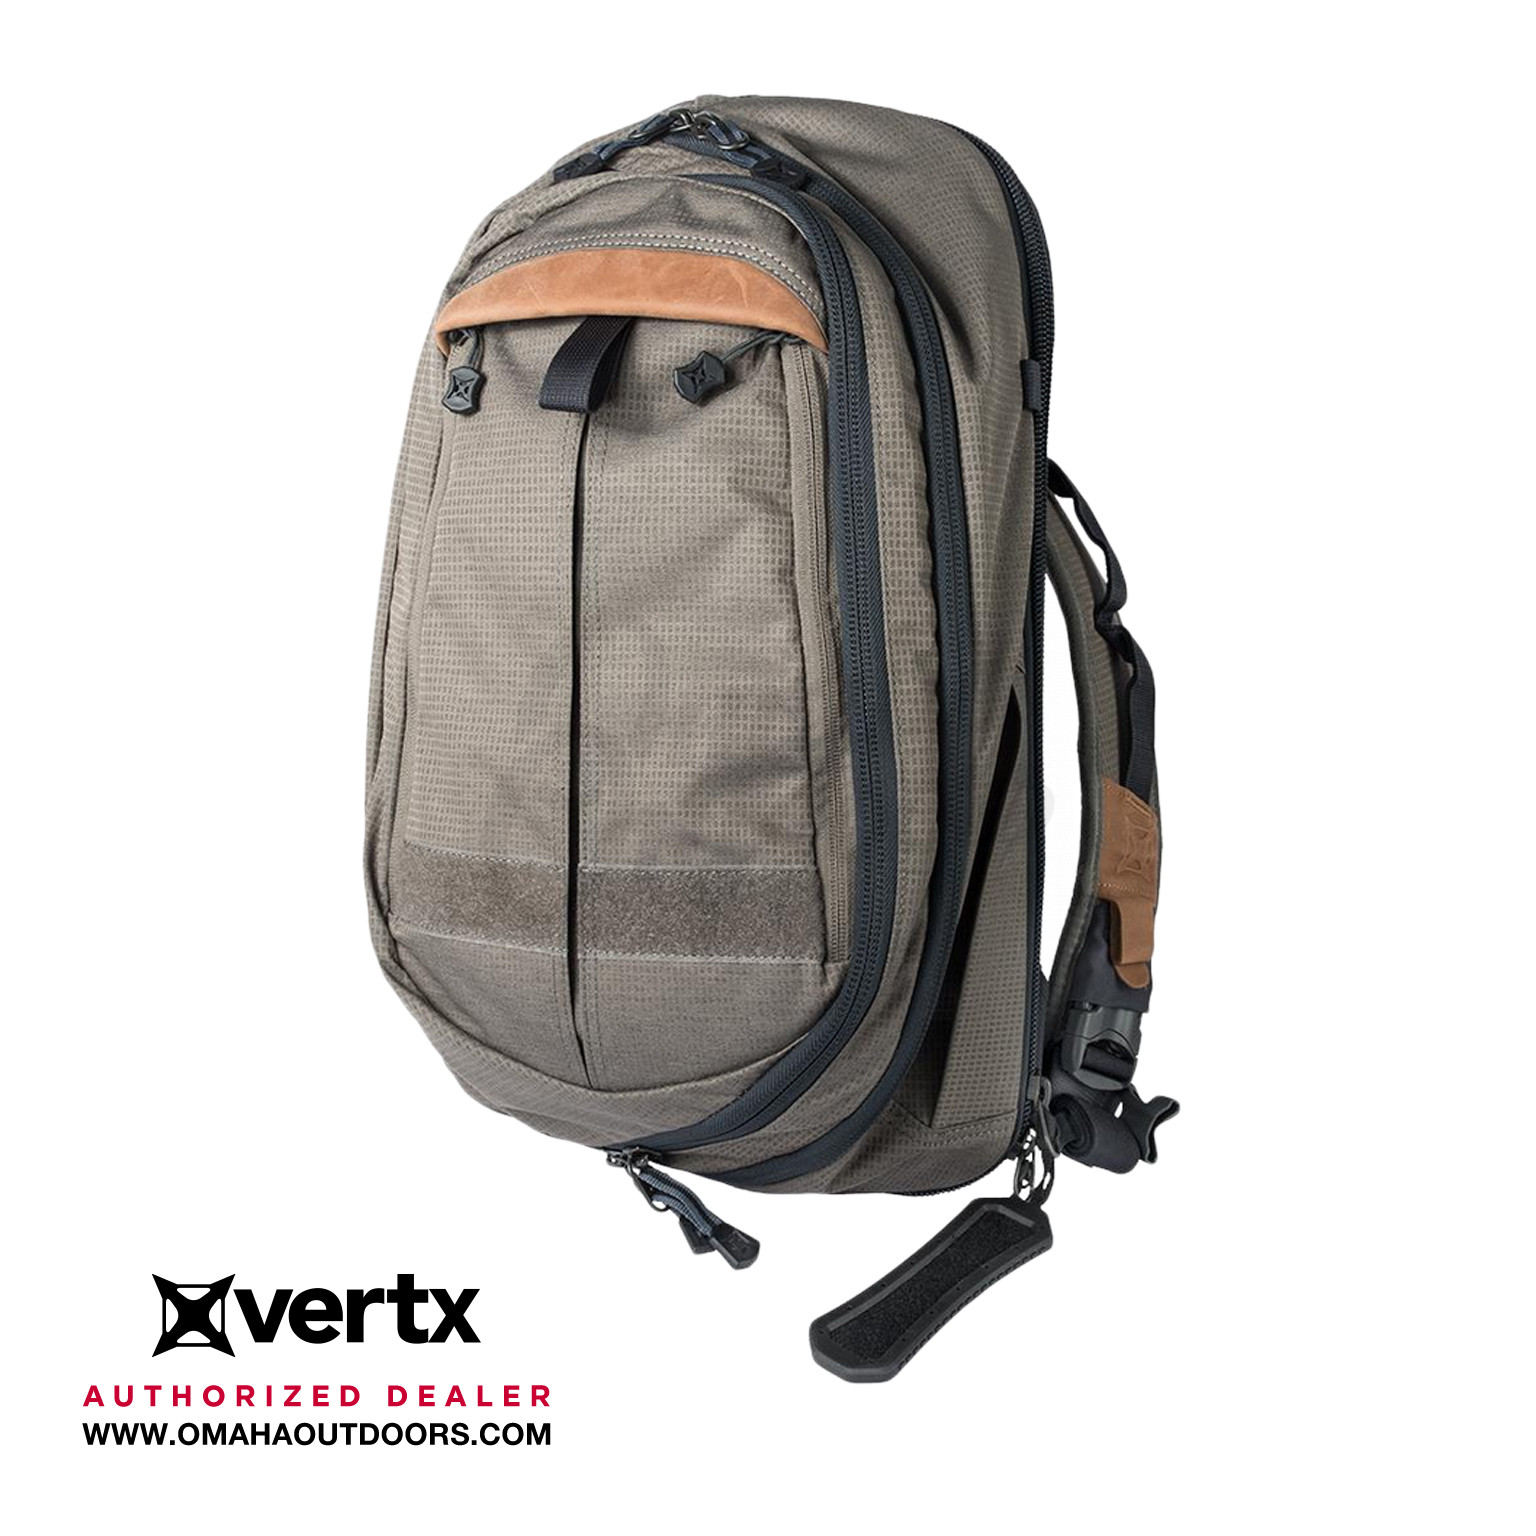 Vertx EDC Commuter Sling Bag Backpack Black Smoke Gray Midnight Navy VTX5010 